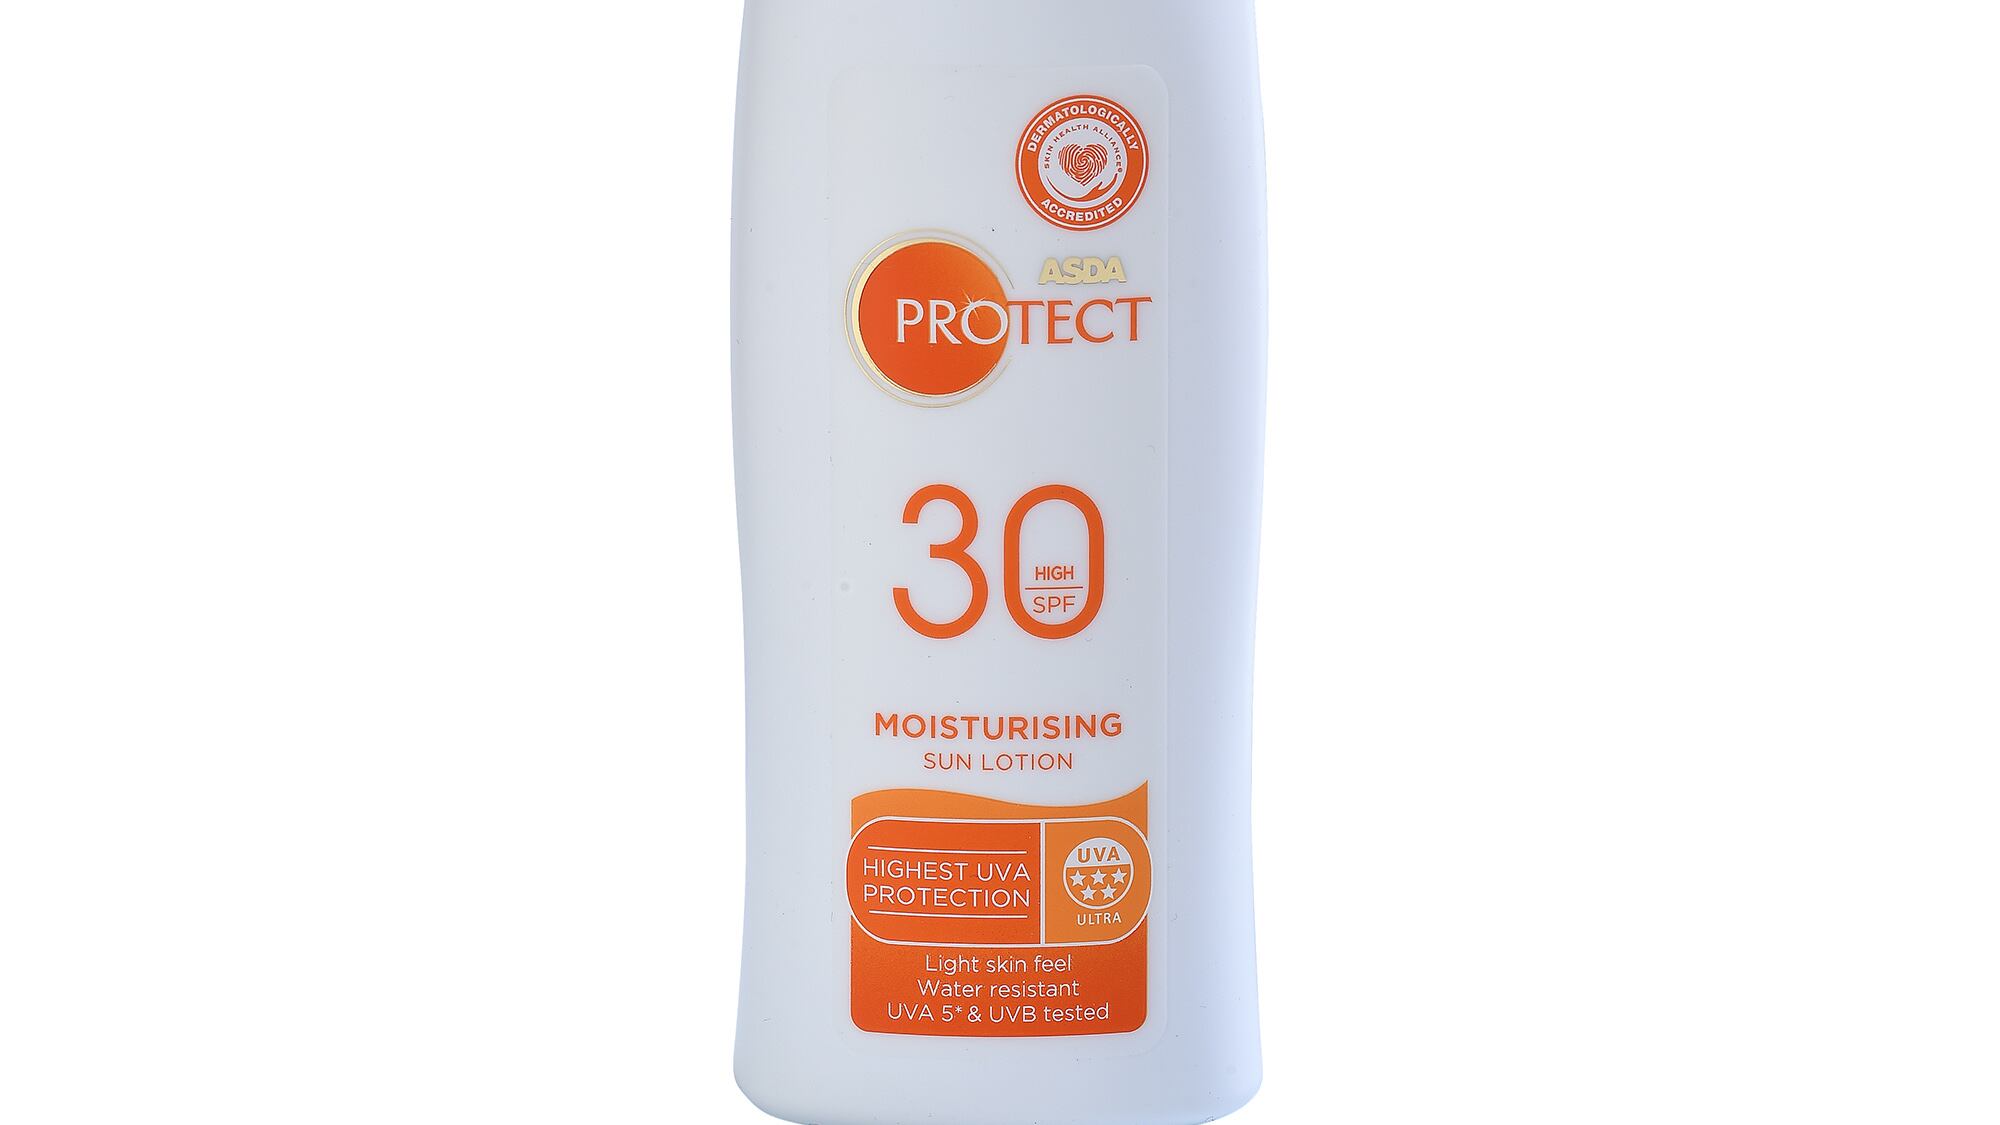 Asda Protect Moisturising Sun Lotion SPF 30 High, which failed the annual Which? sunscreen testing